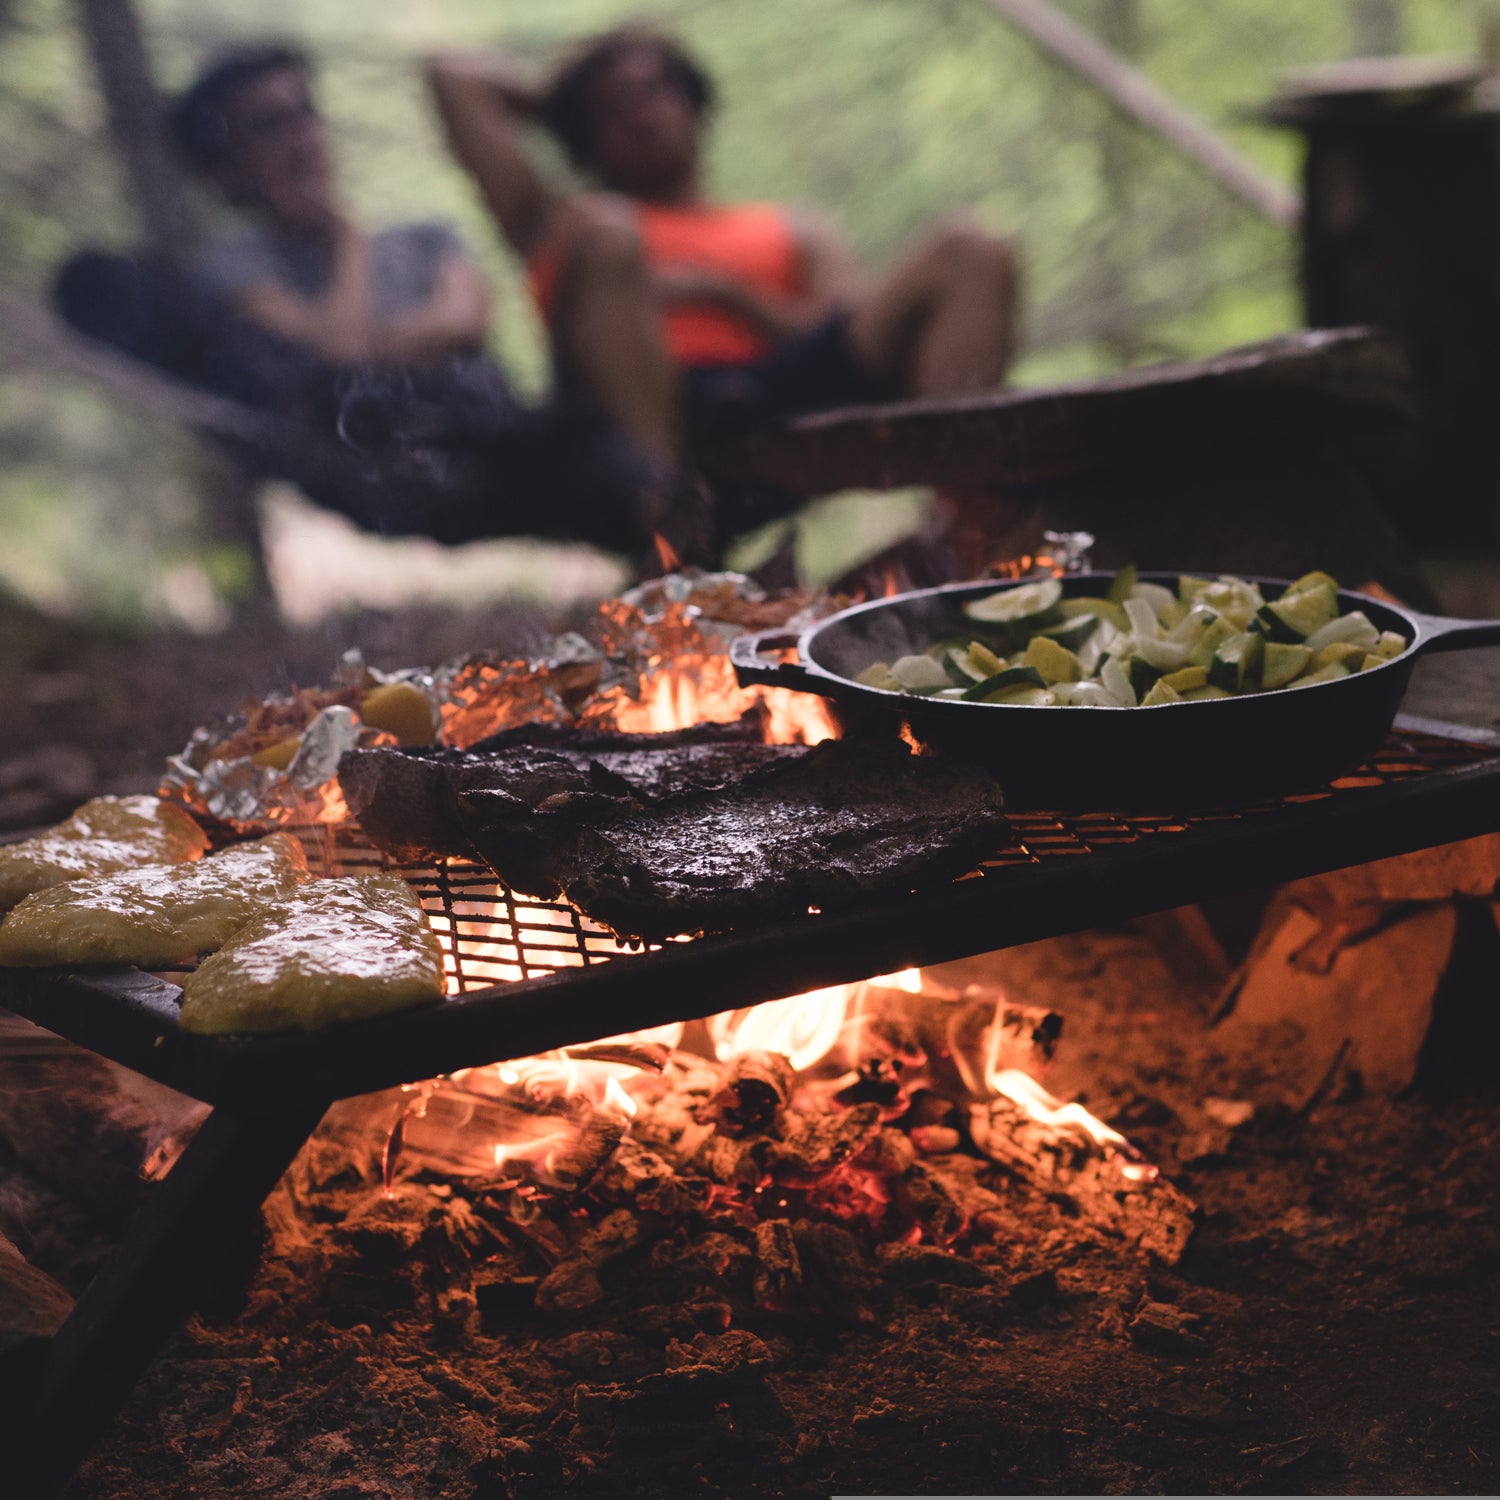 https://cdn.outsideonline.com/wp-content/uploads/2017/11/08/myles-tan-camping-cooking-hammock_s.jpg